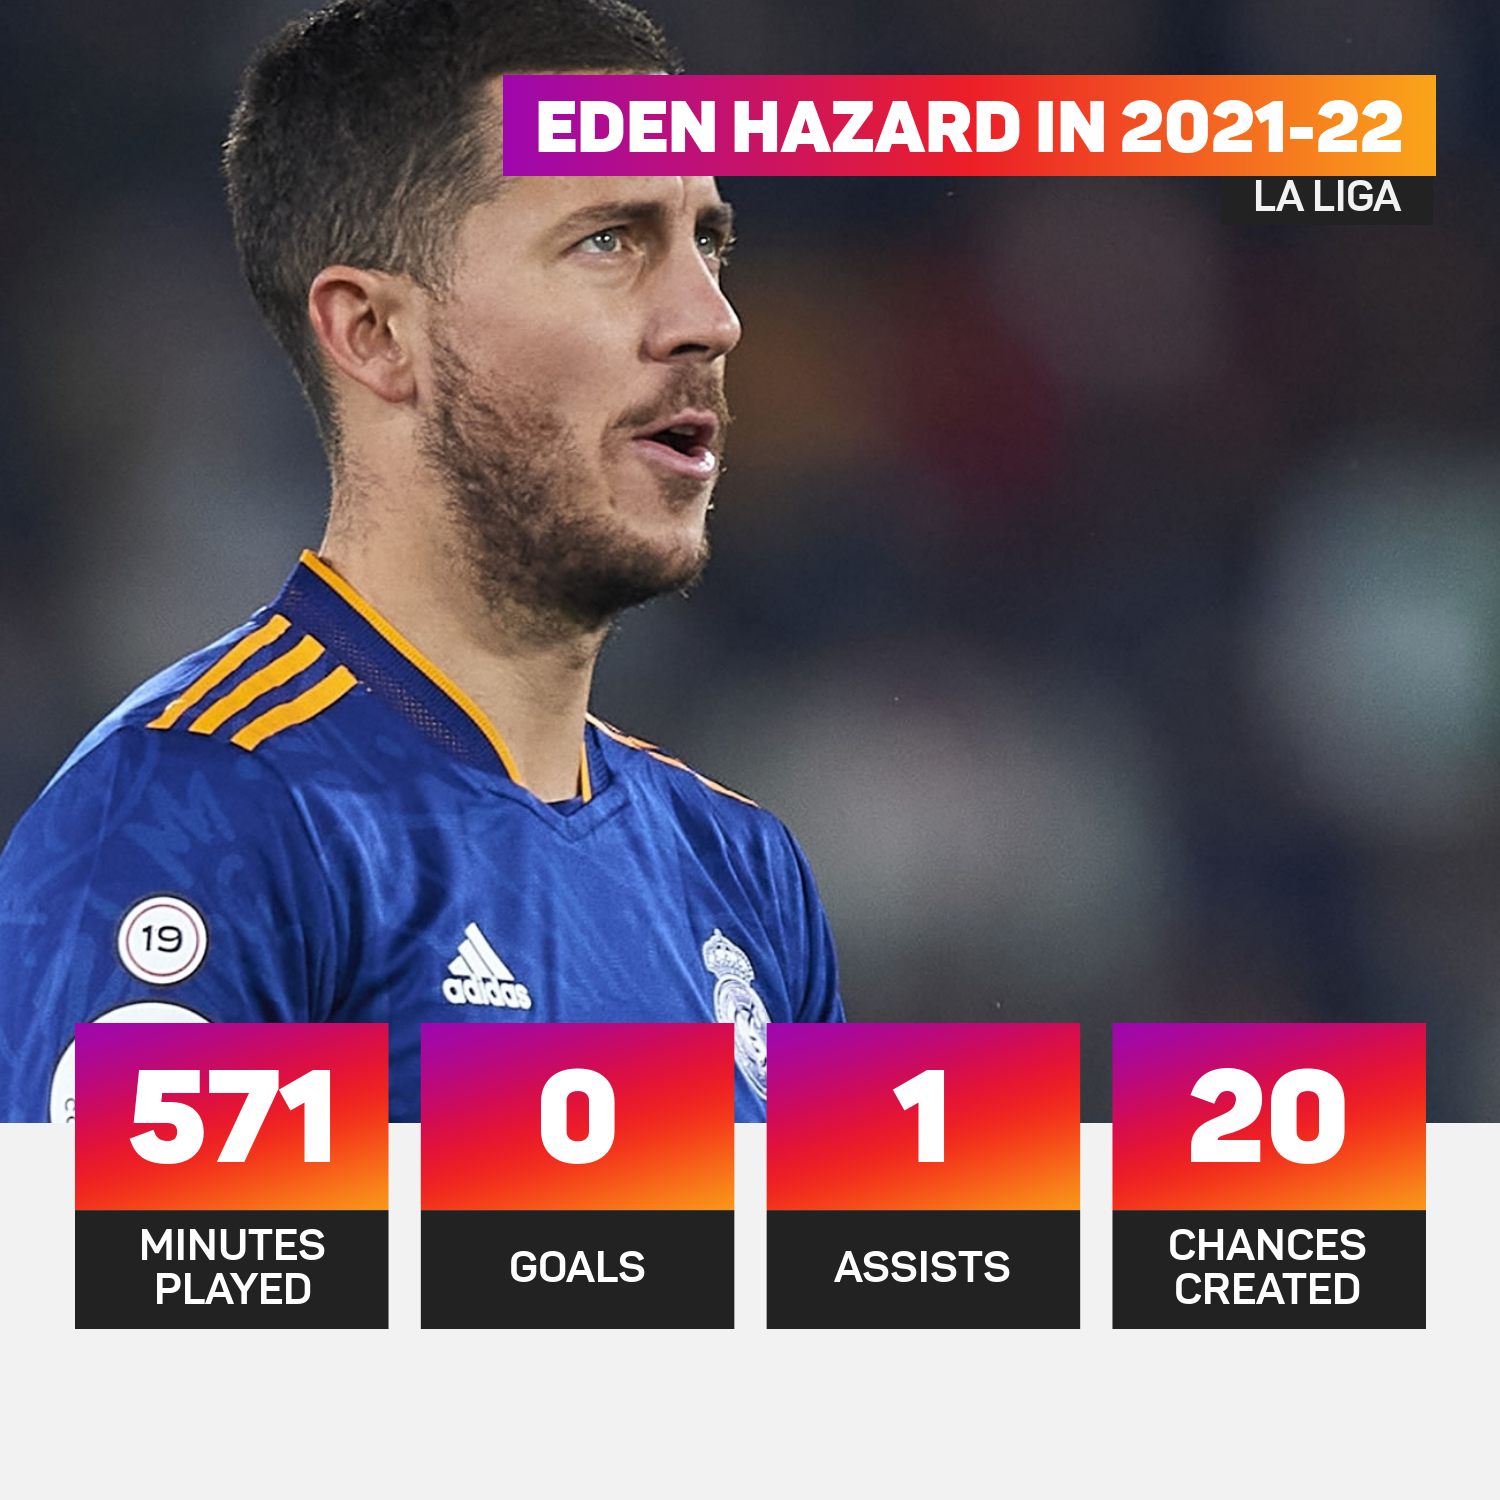 Eden Hazard in LaLiga in 2021-22, as of 22012022